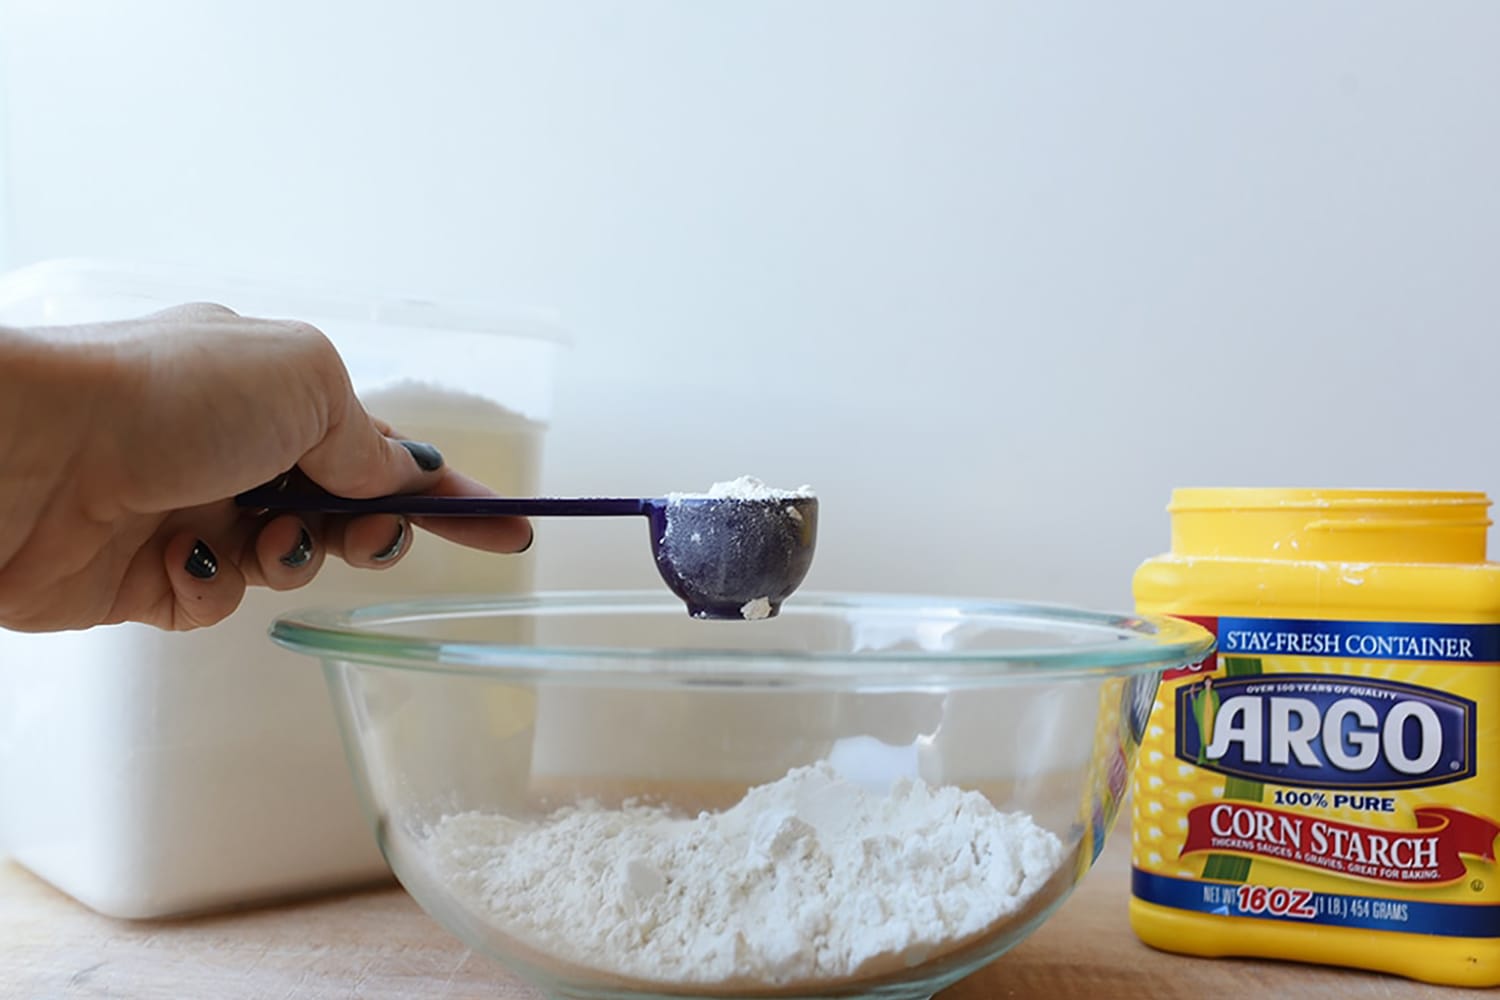 https://www.letseatcake.com/wp-content/uploads/2018/07/How-to-Make-Cake-Flour-1.jpg